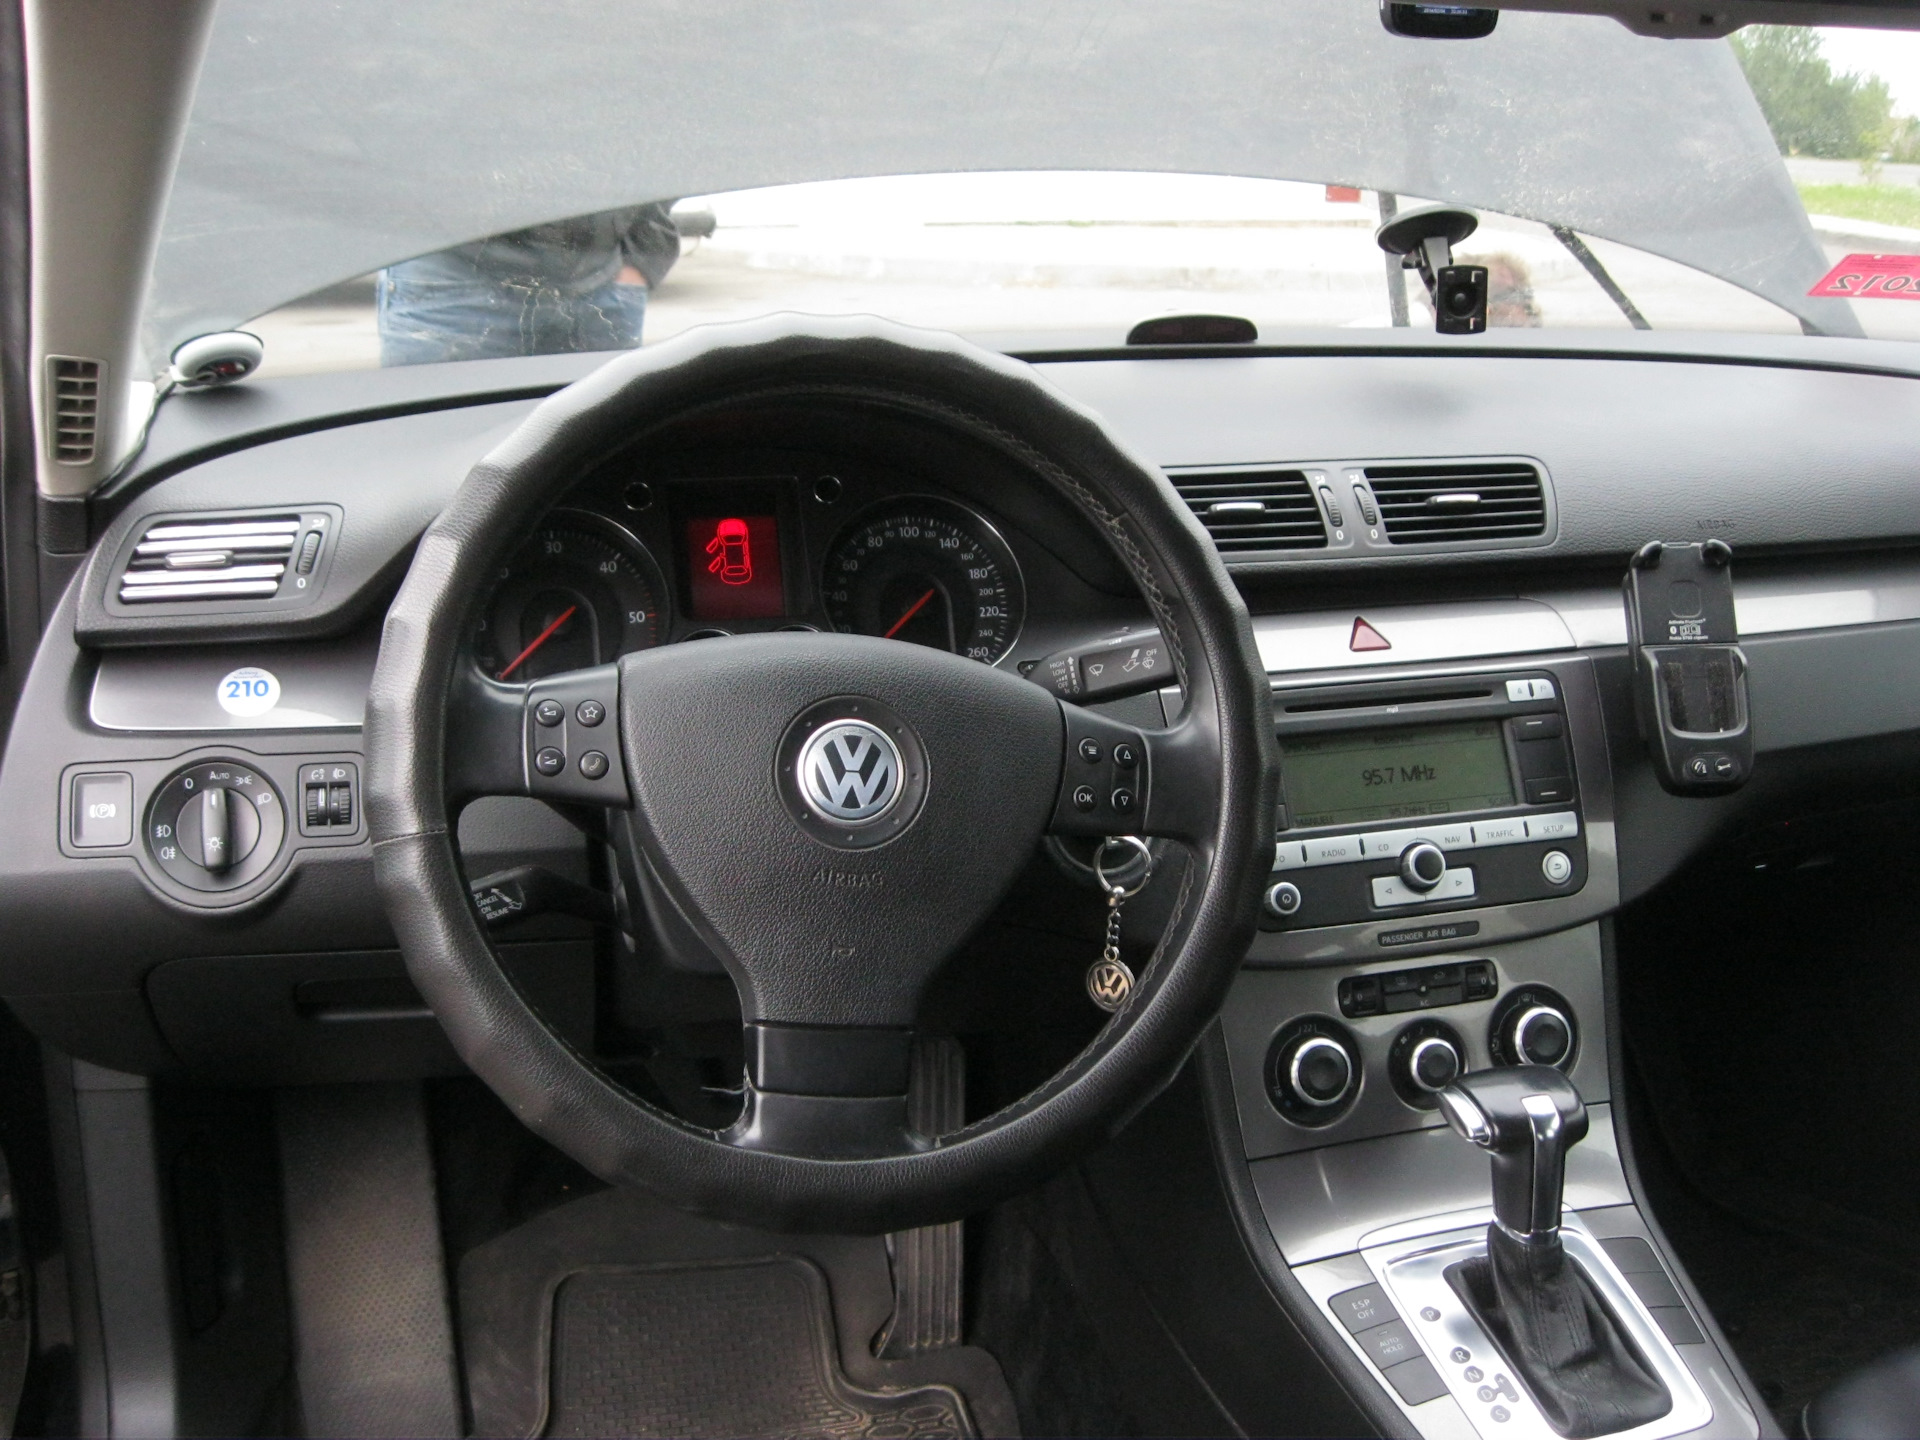 Фольксваген пассат б6 2. Фольксваген Пассат б6 автомат. Volkswagen Passat b6 2.0 TDI 2009. Passat b6 DSG. Passat b6 автомат.